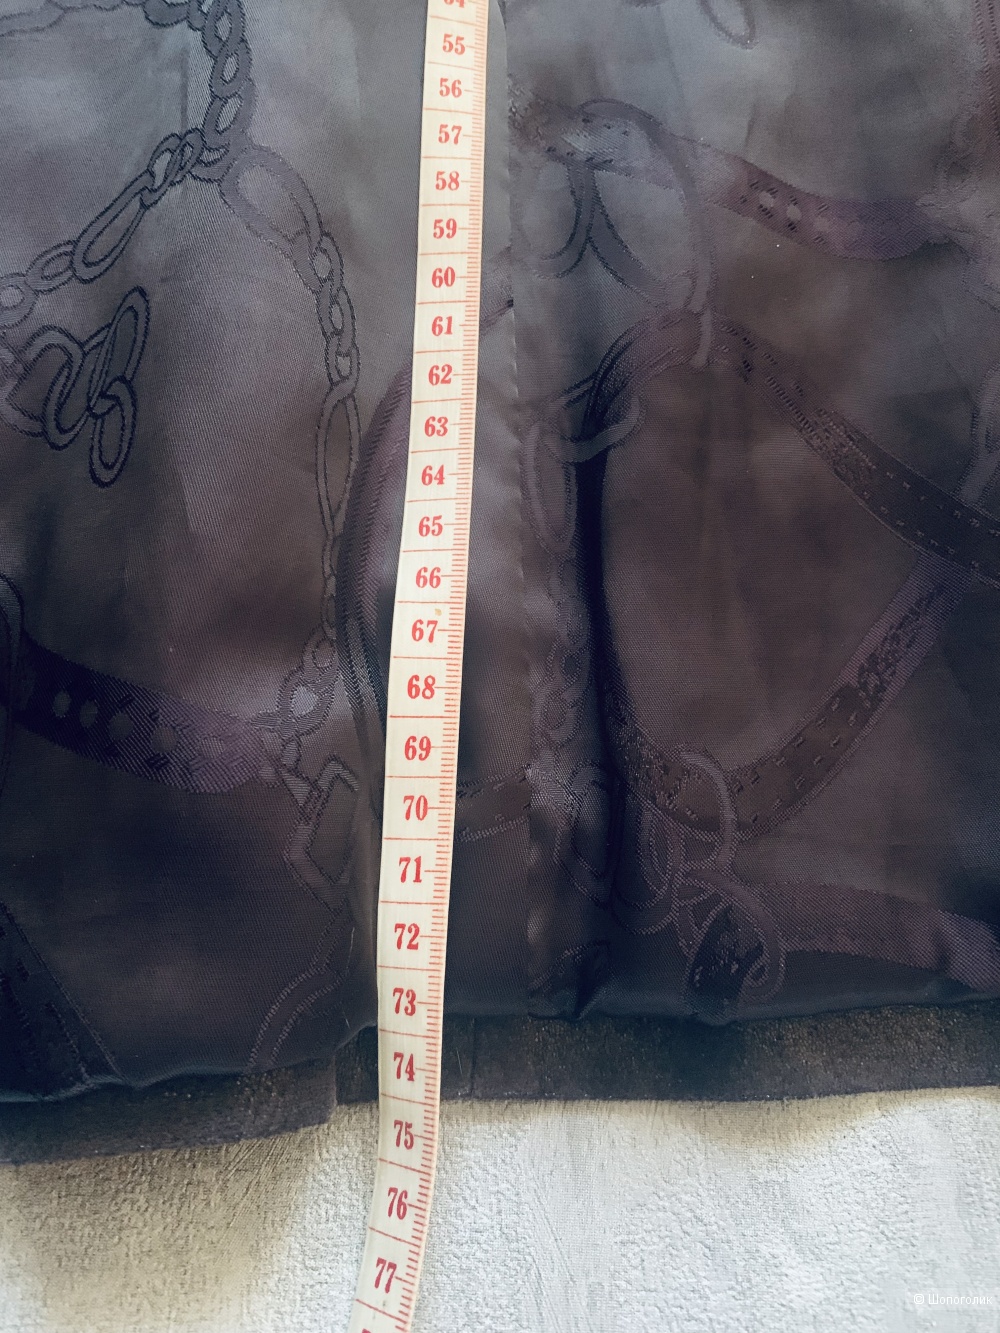 Куртка кожаная Vesuvia размер 50-52